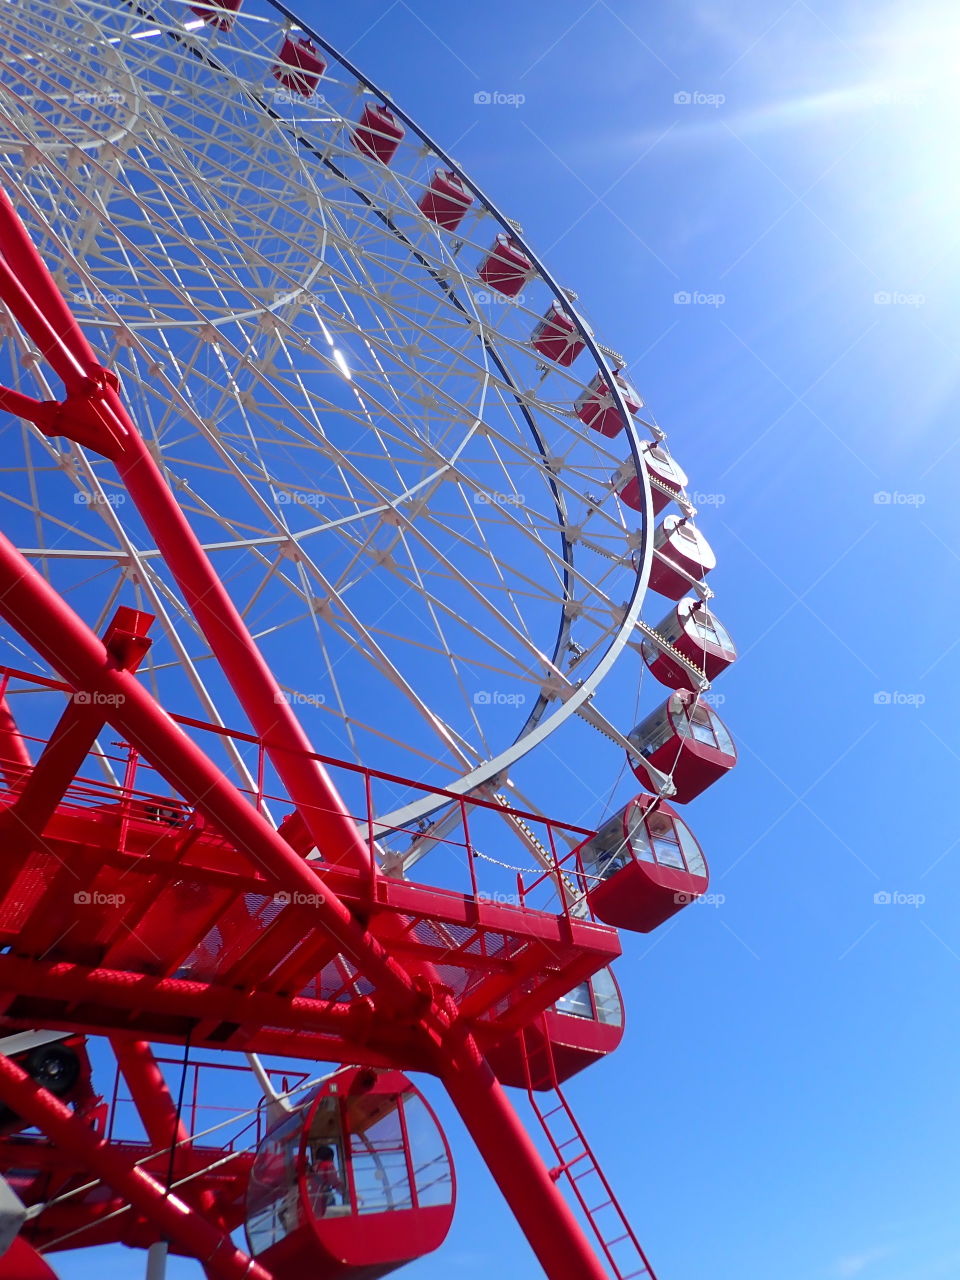 Carnival, Entertainment, Carousel, Roll Along, Ferris Wheel